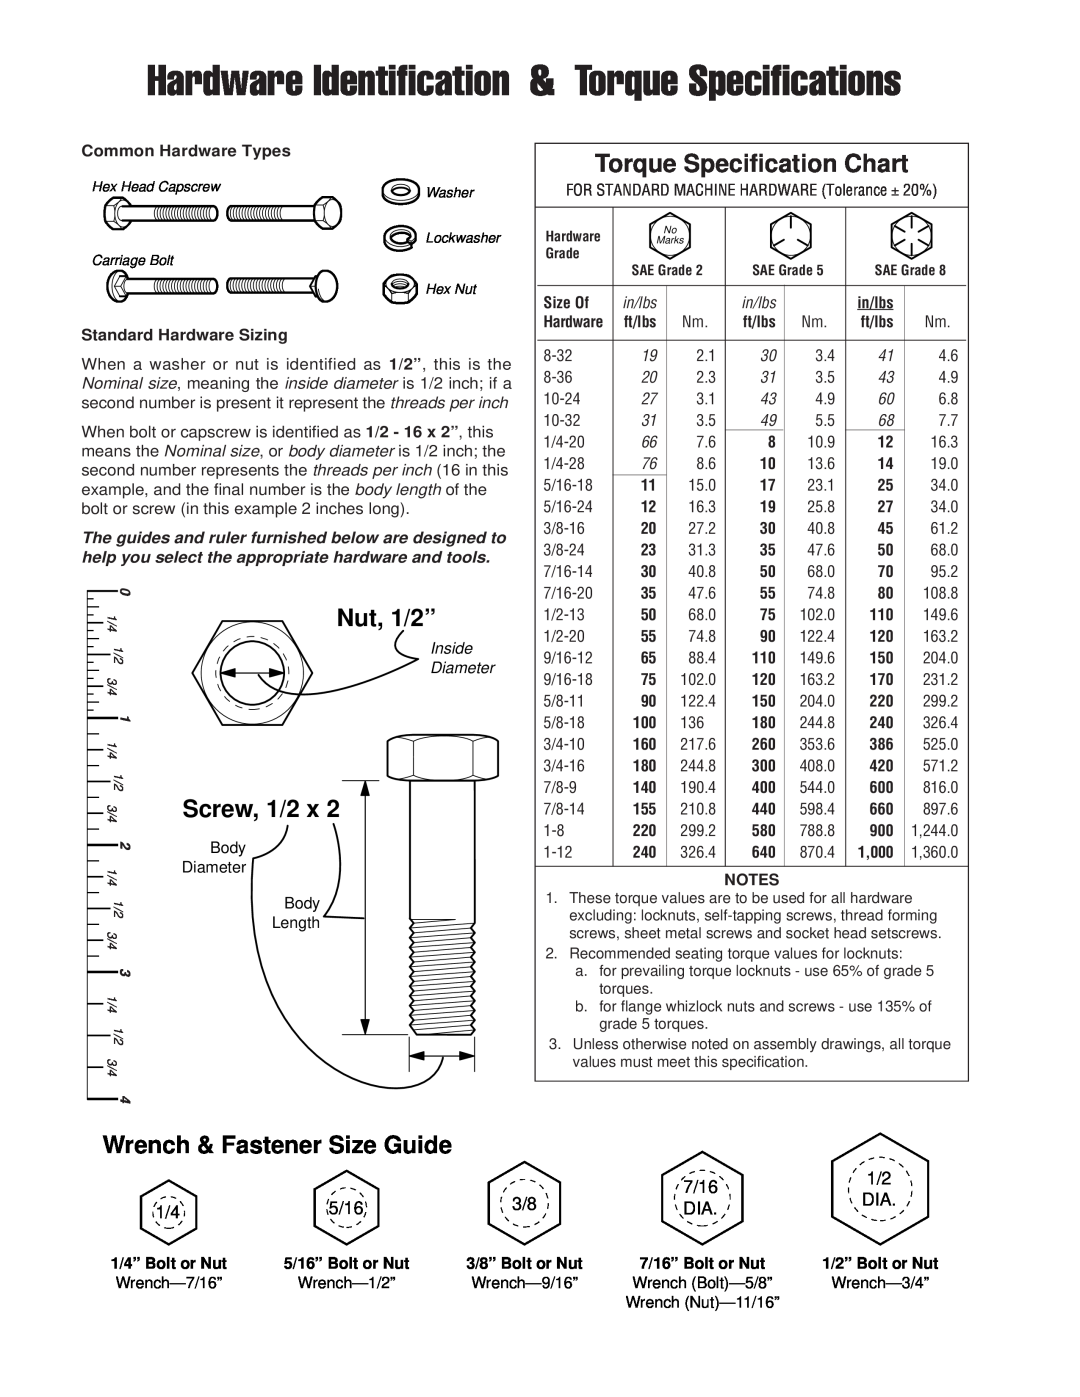 Simplicity 821RT Hardware Identification & Torque Specifications, Torque Specification Chart, Nut, 1/2”, Screw, 1/2 x 